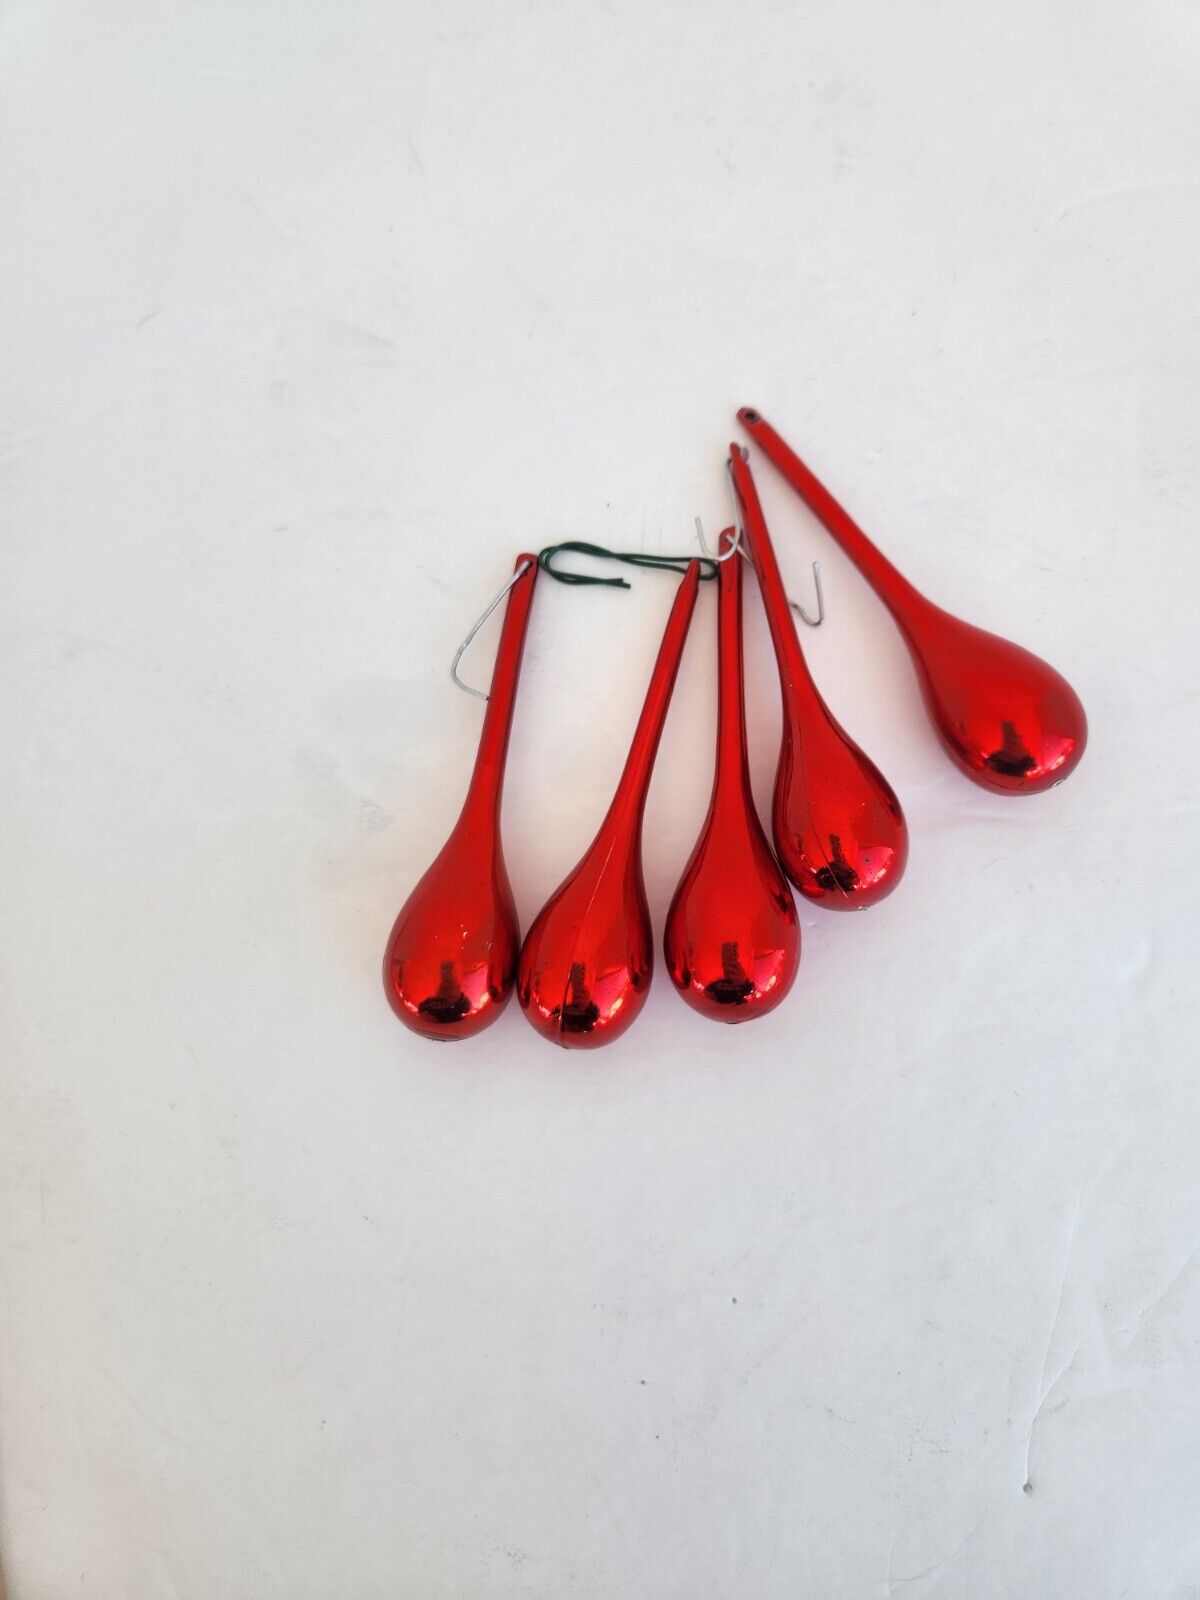 Lot of 5 Vintage Teardrop Christmas Ornaments Red Metallic 3” Long Plastic 